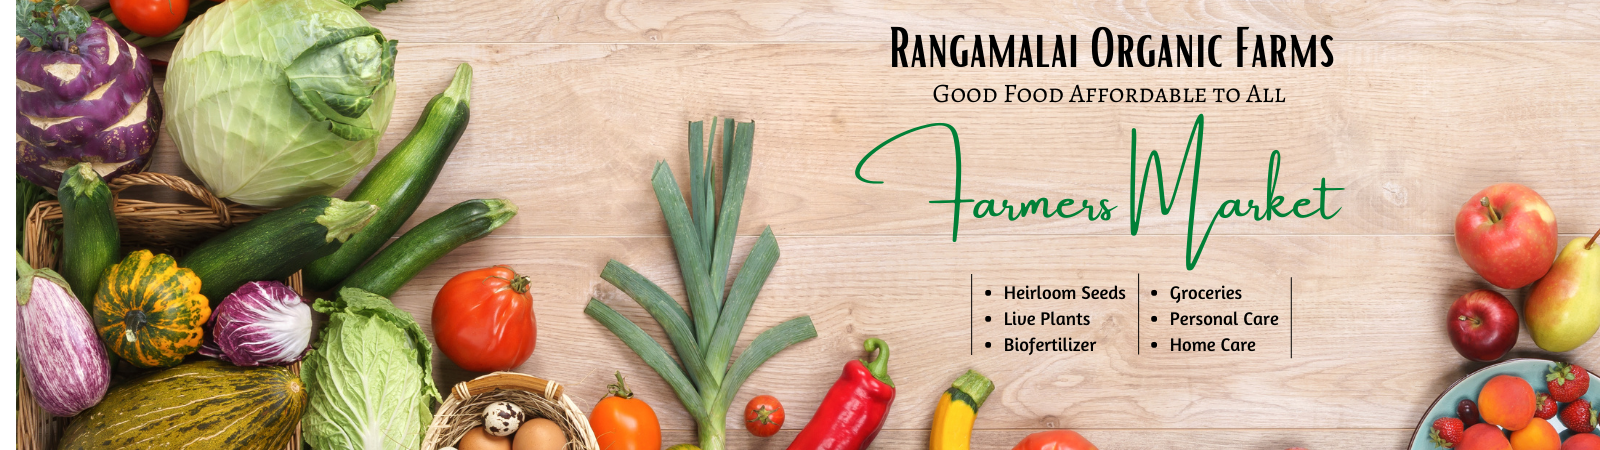 Welcome to Rangamalai Organic Farms (ROF) - Farmer Market